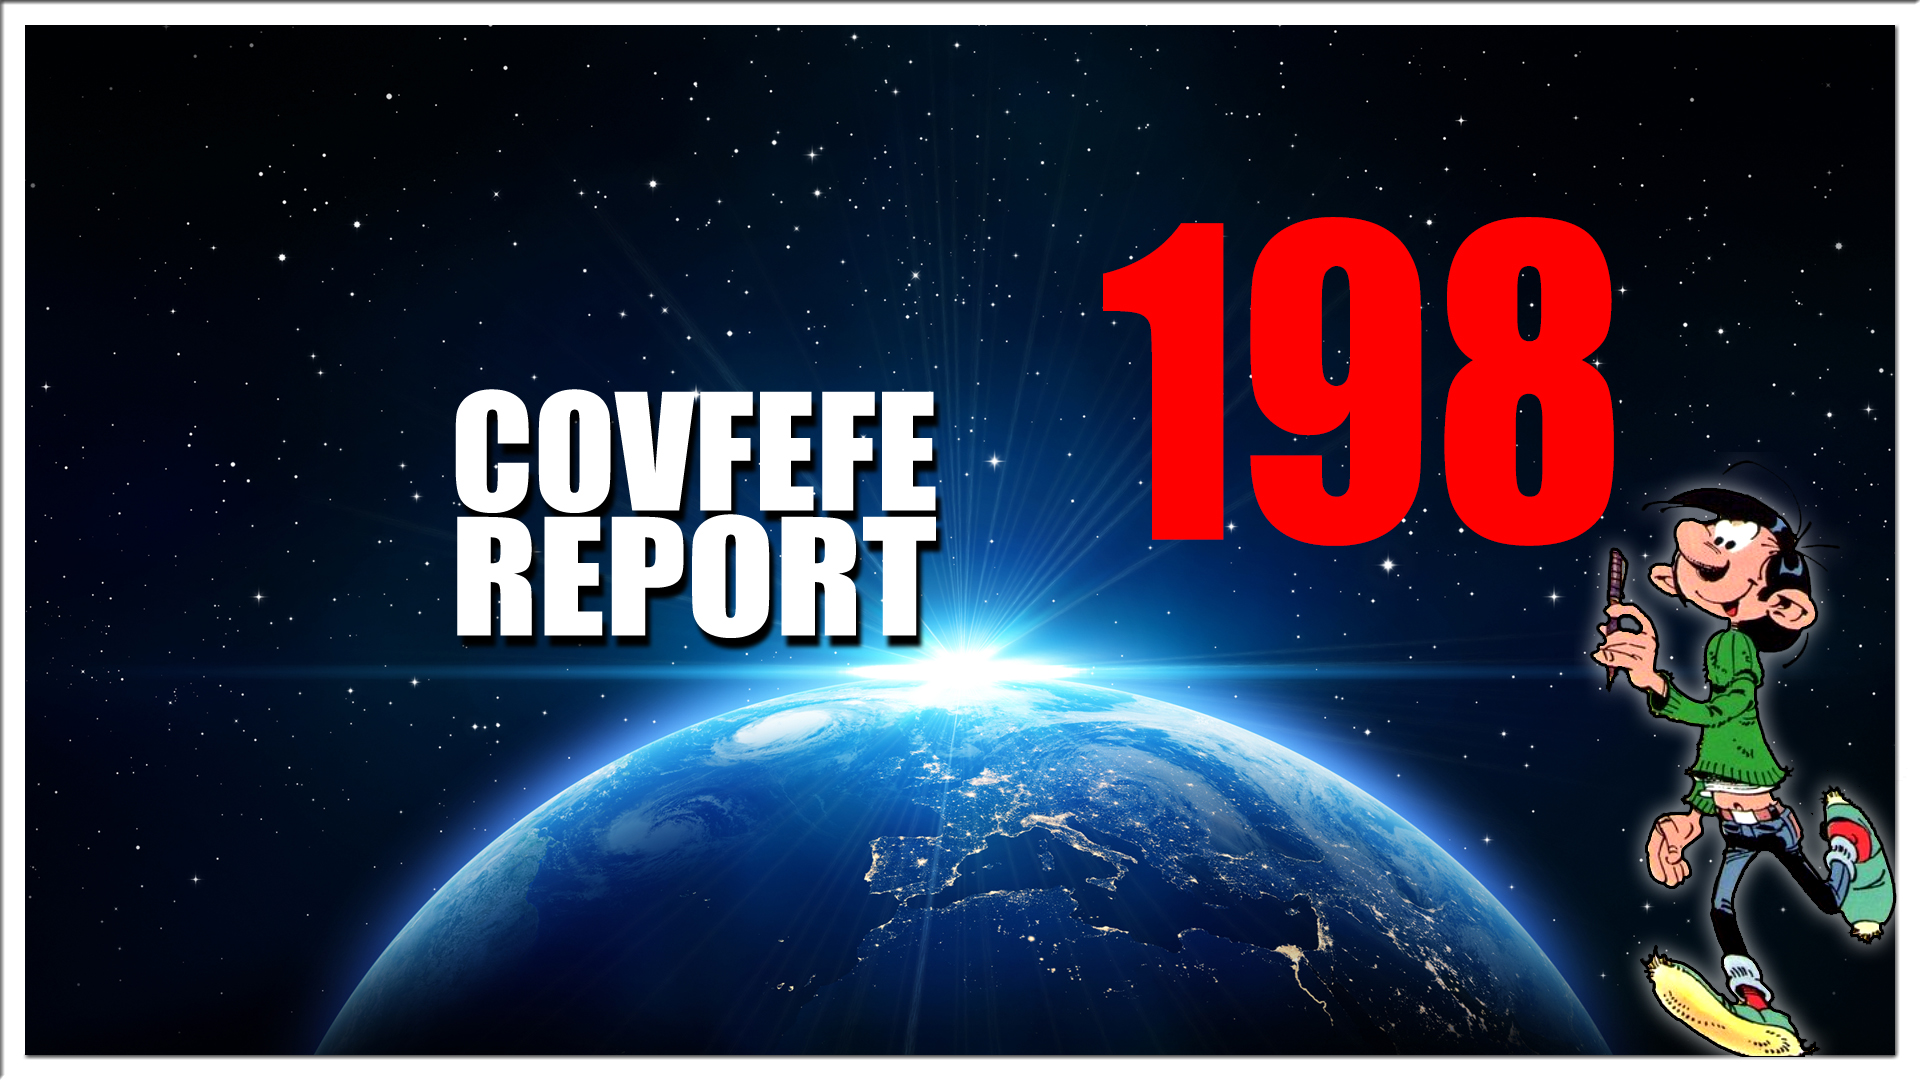 Covfefe Report 198. ngt